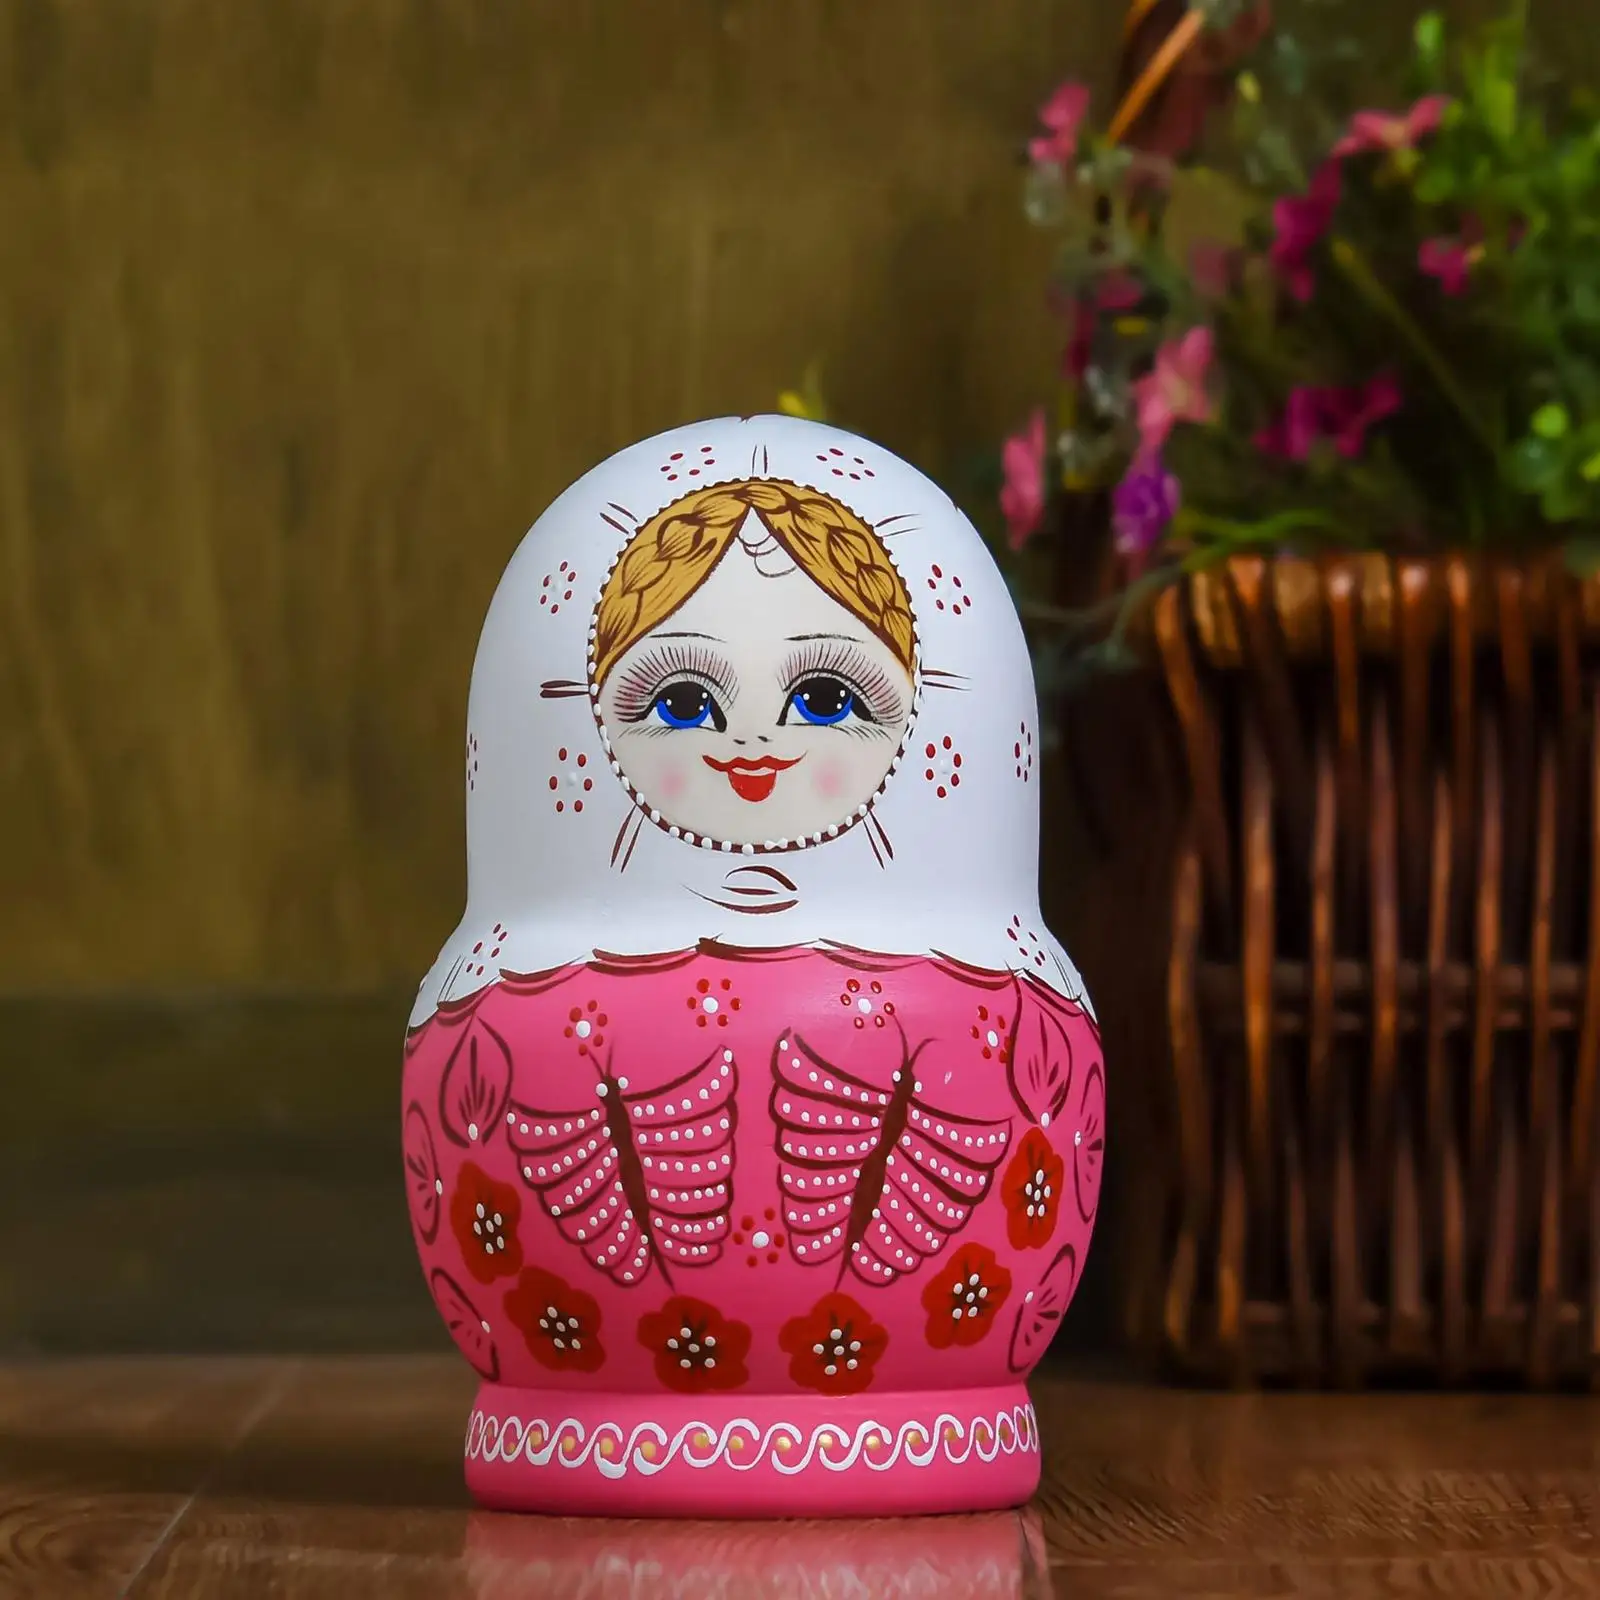 15 Layer Russian Nesting Dolls Matryoshka Dolls Educational Toys Home Decor